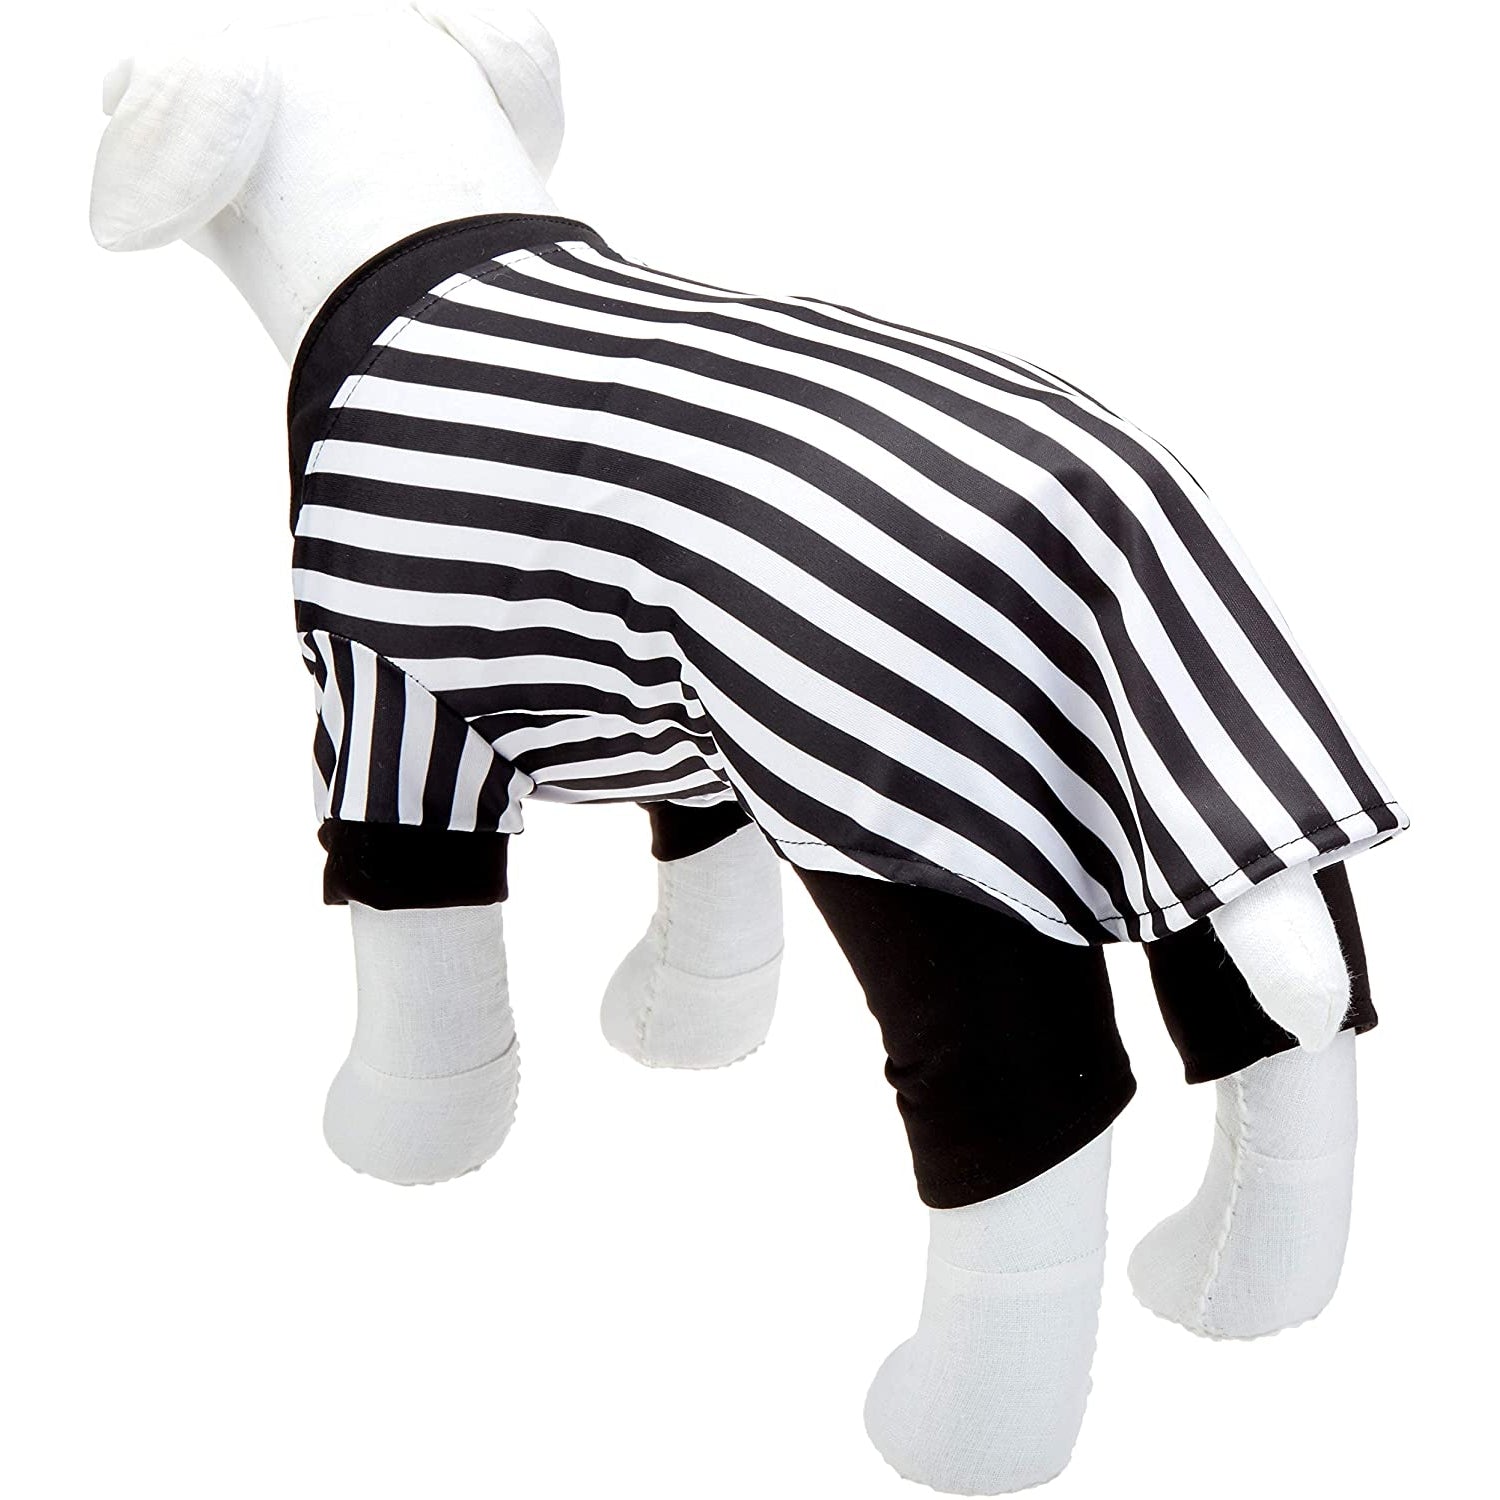 Midlee Referee Dog Halloween Costume